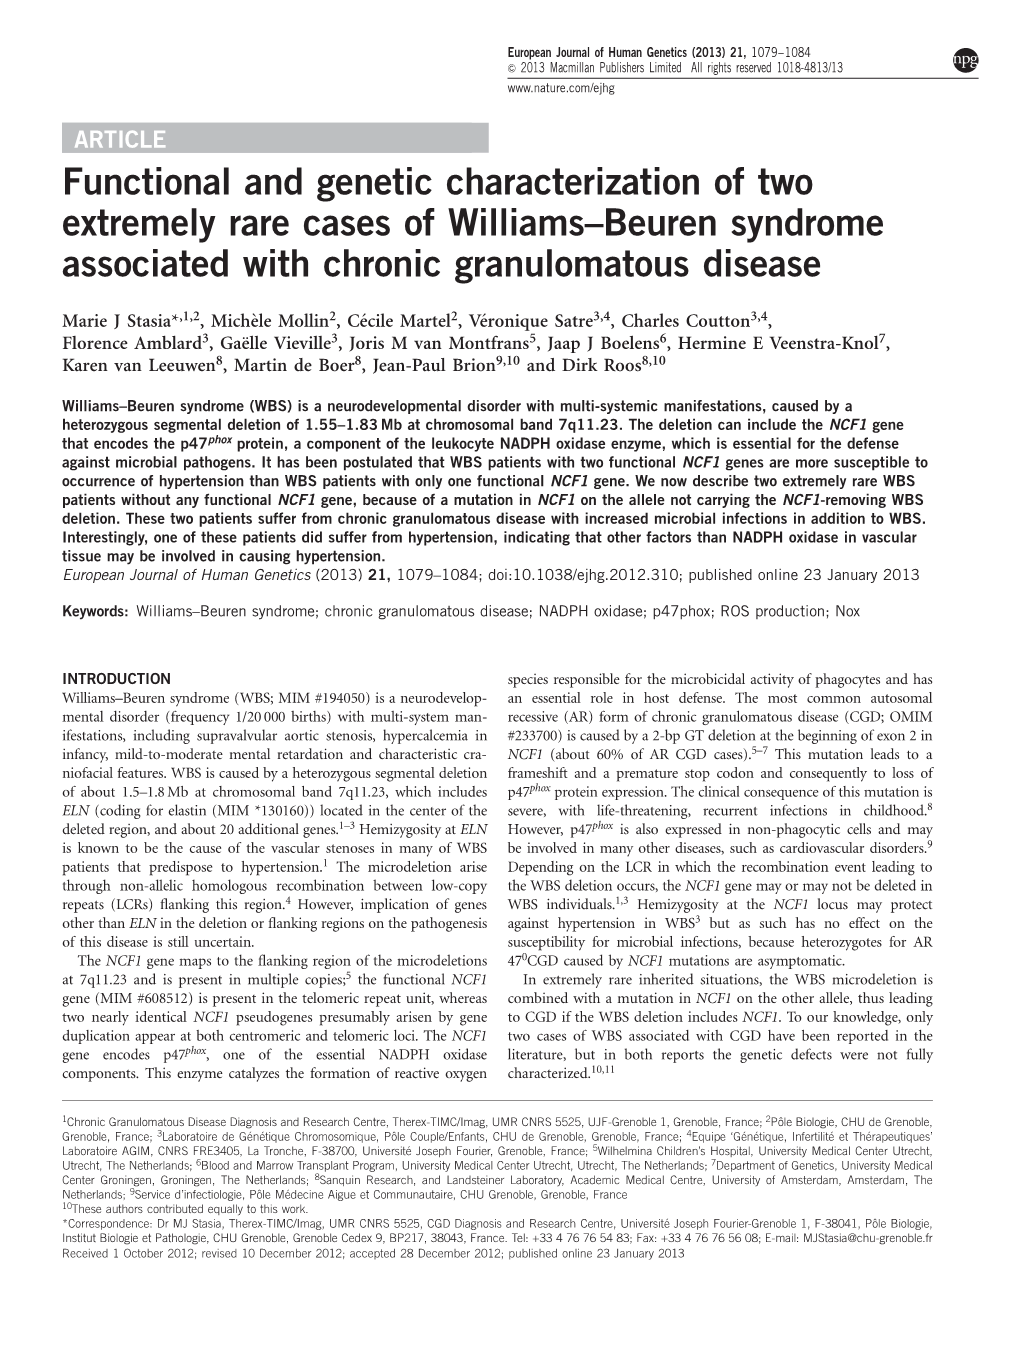 Beuren Syndrome Associated with Chronic Granulomatous Disease